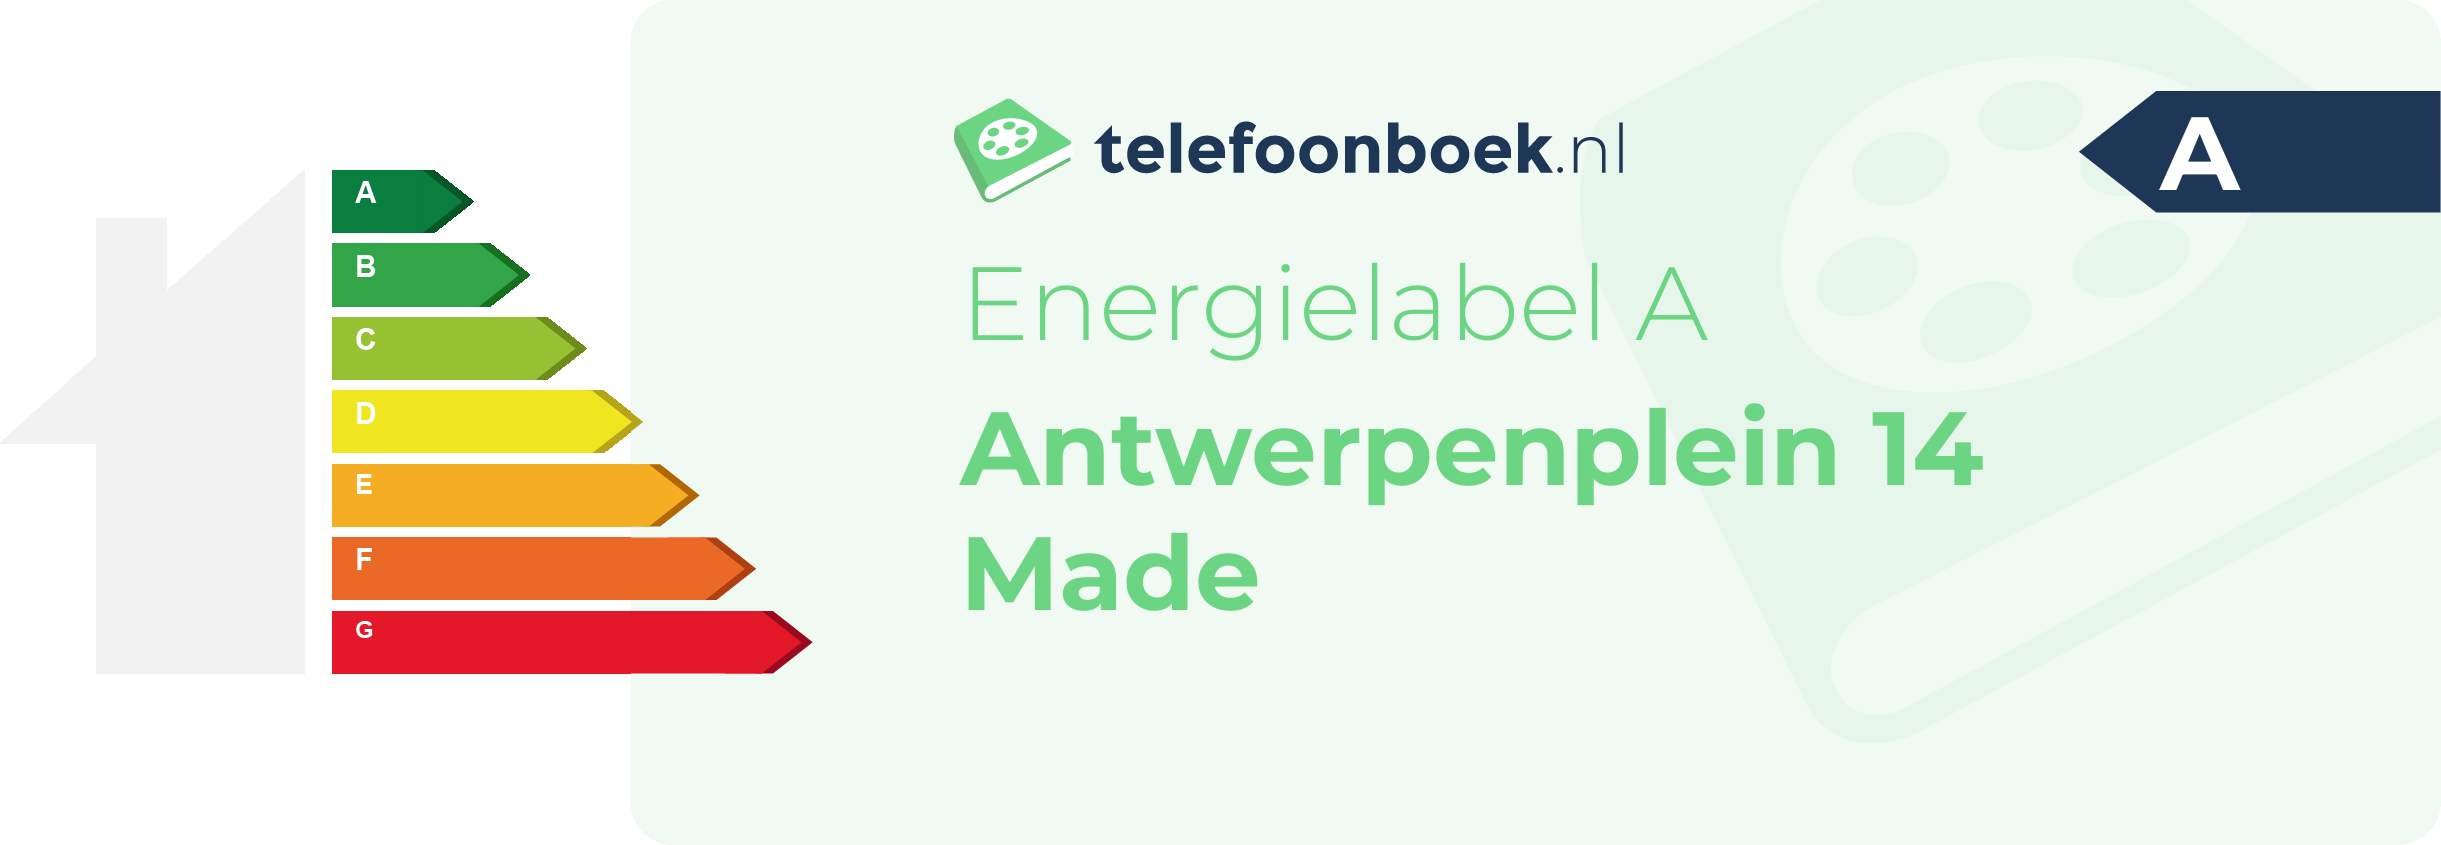 Energielabel Antwerpenplein 14 Made